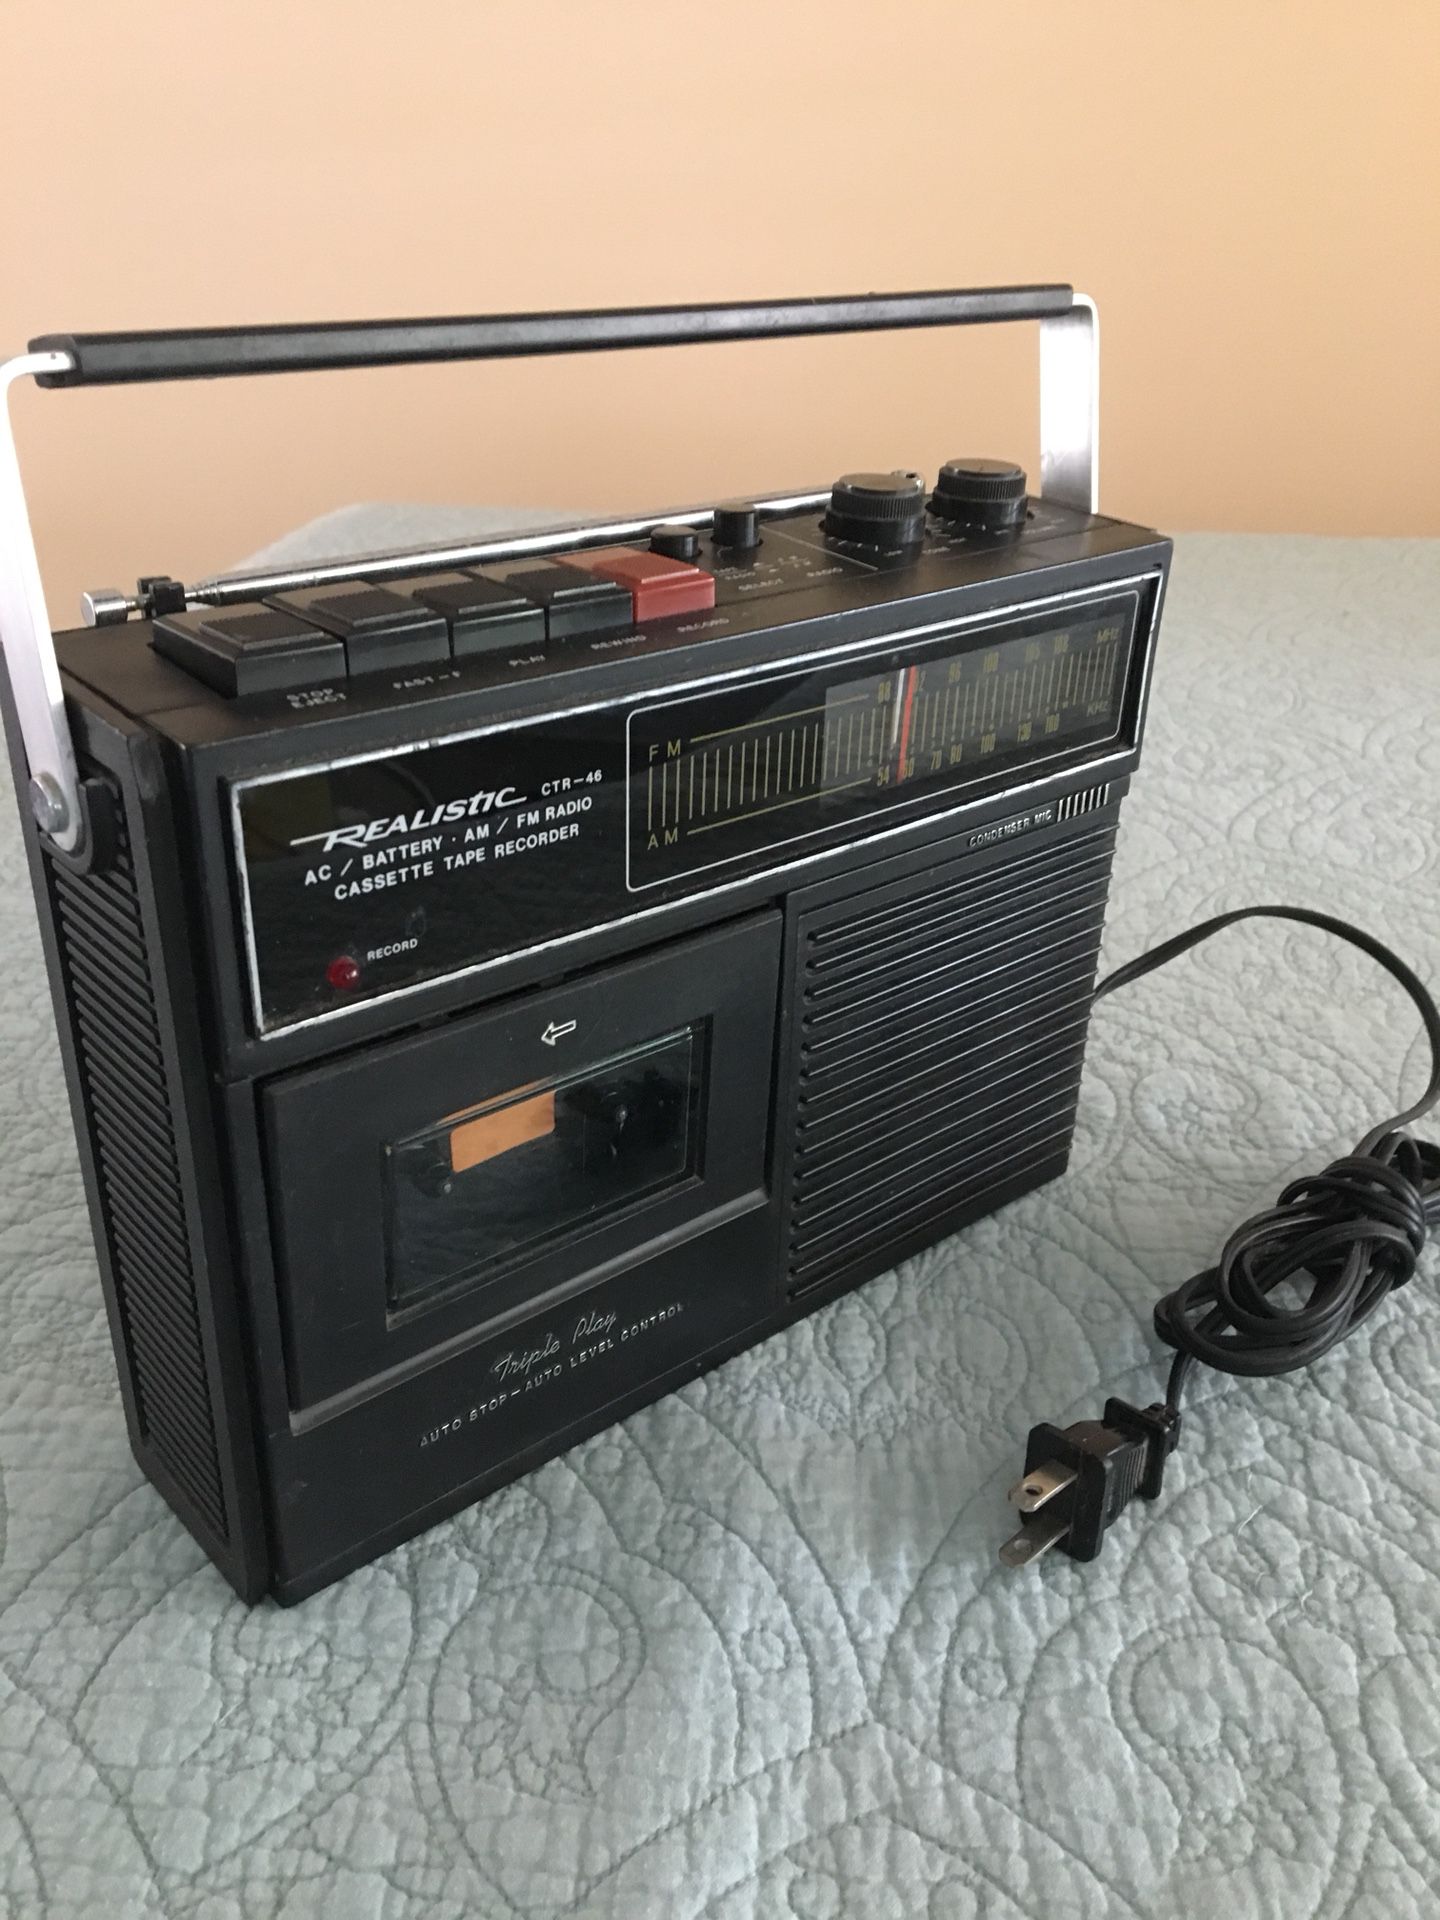 FOR PARTS* Vintage Realistic (CTR-46) AM / FM Radio Cassette Tape Recorder